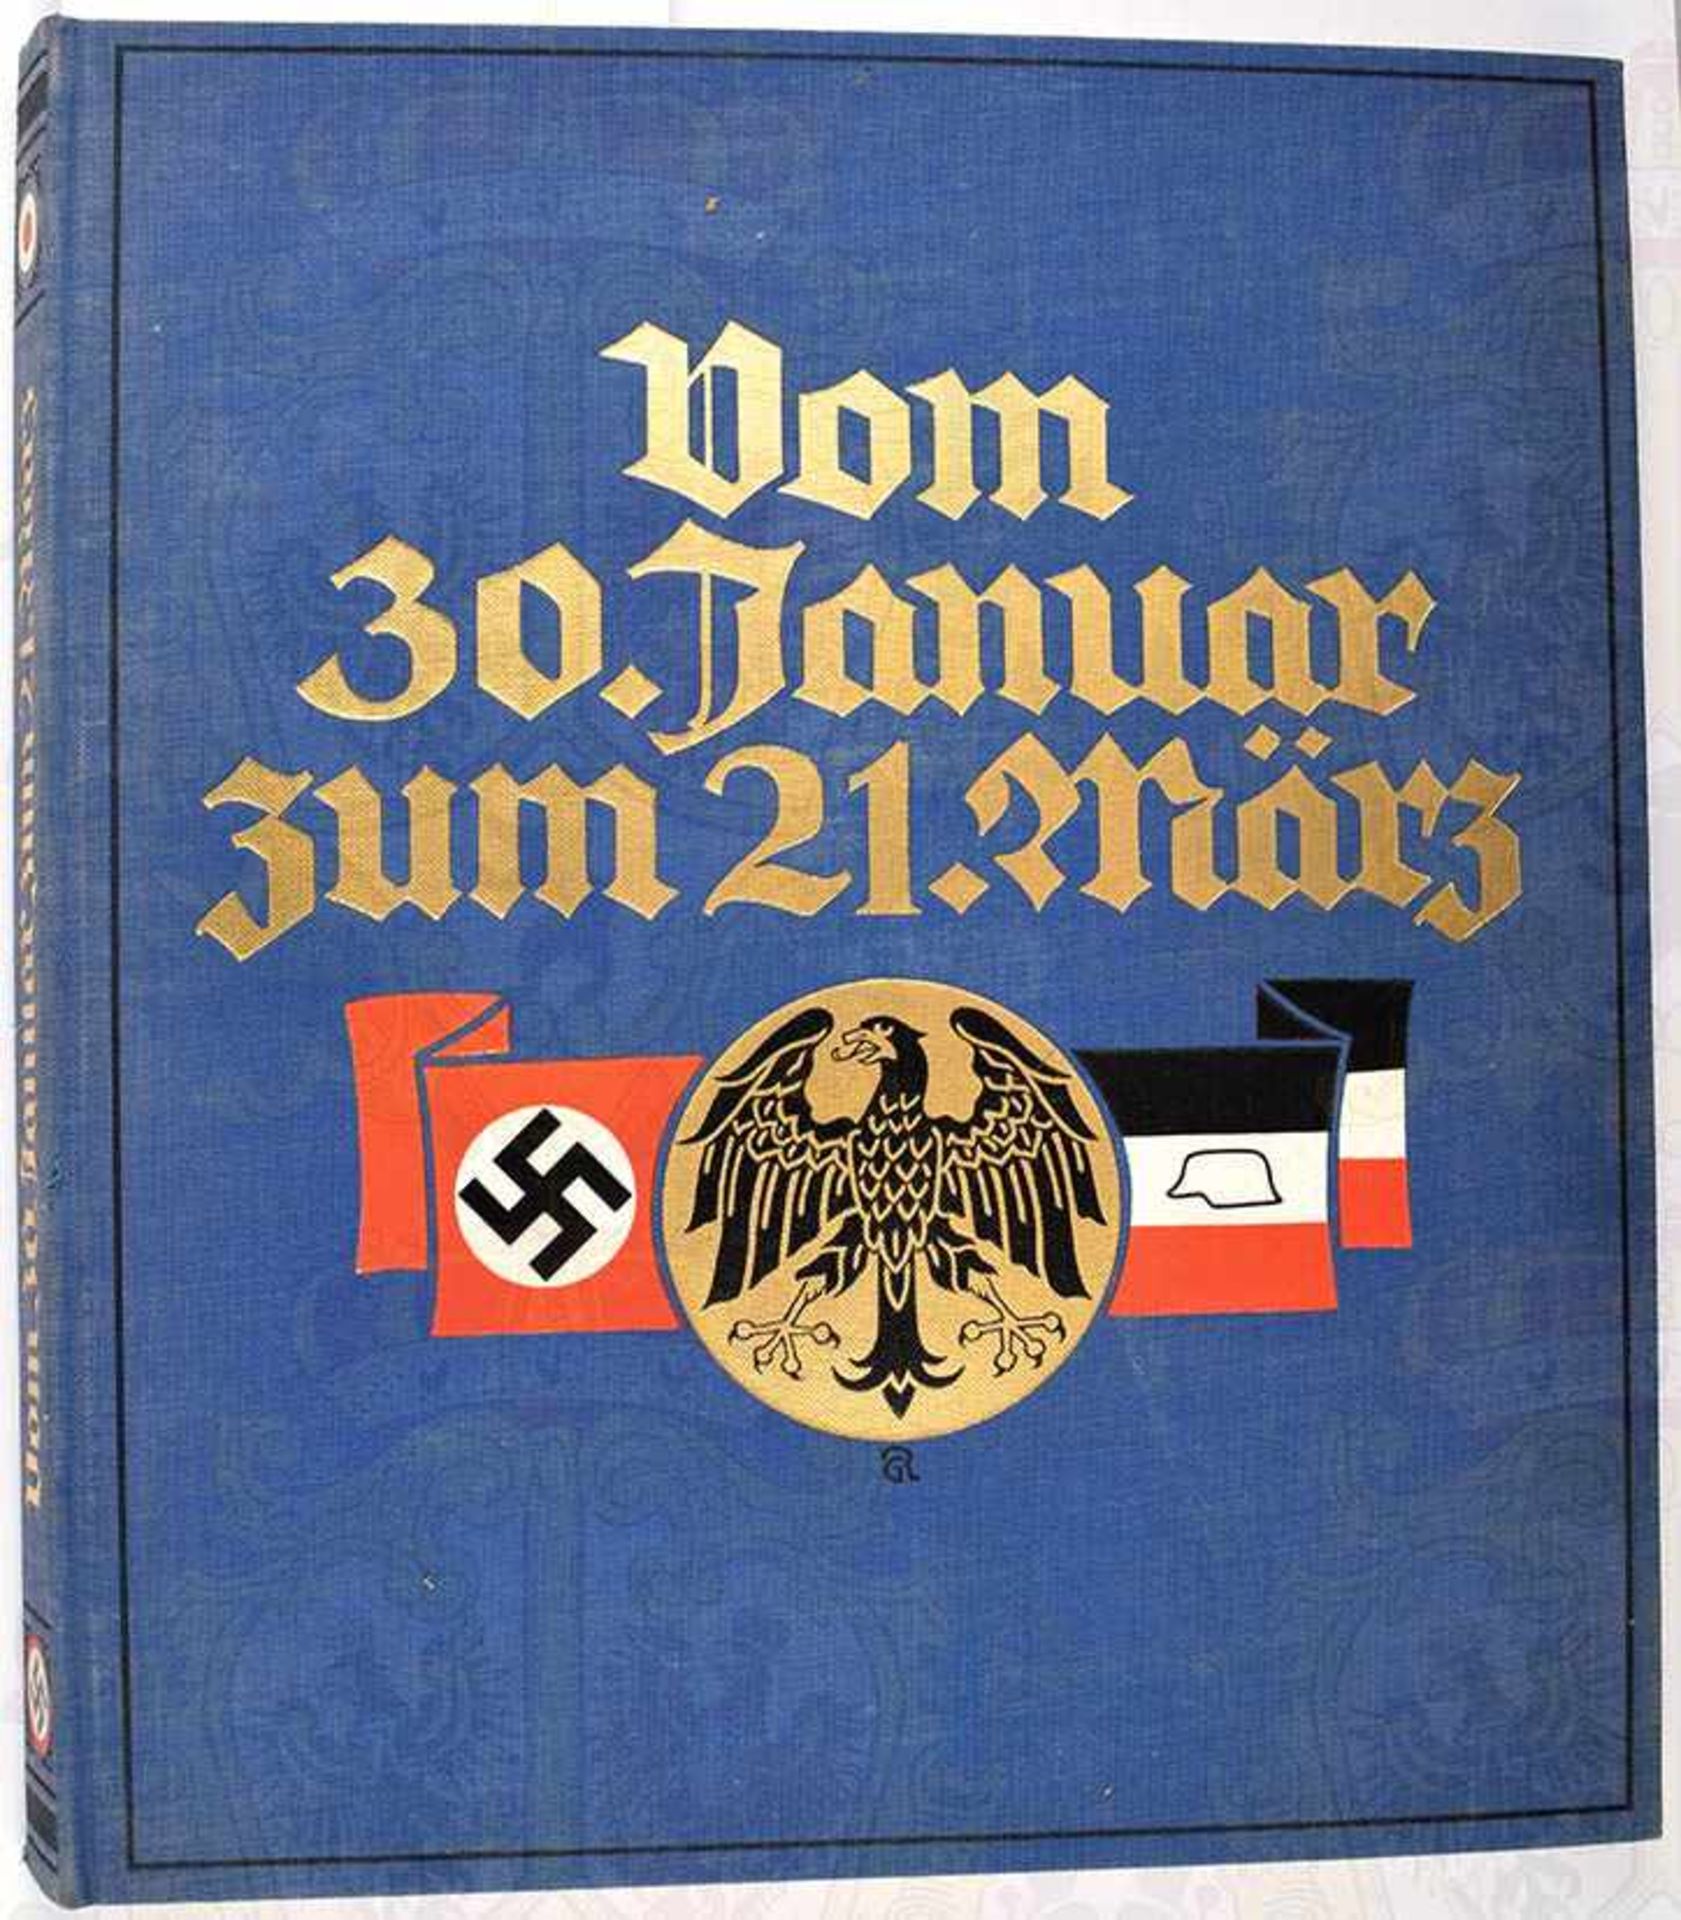 VOM 30. JANUAR ZUM 21. MÄRZ, „Die Tage d. nationalen Erhebung“, E. Czech-Jochberg, Verlag „Das